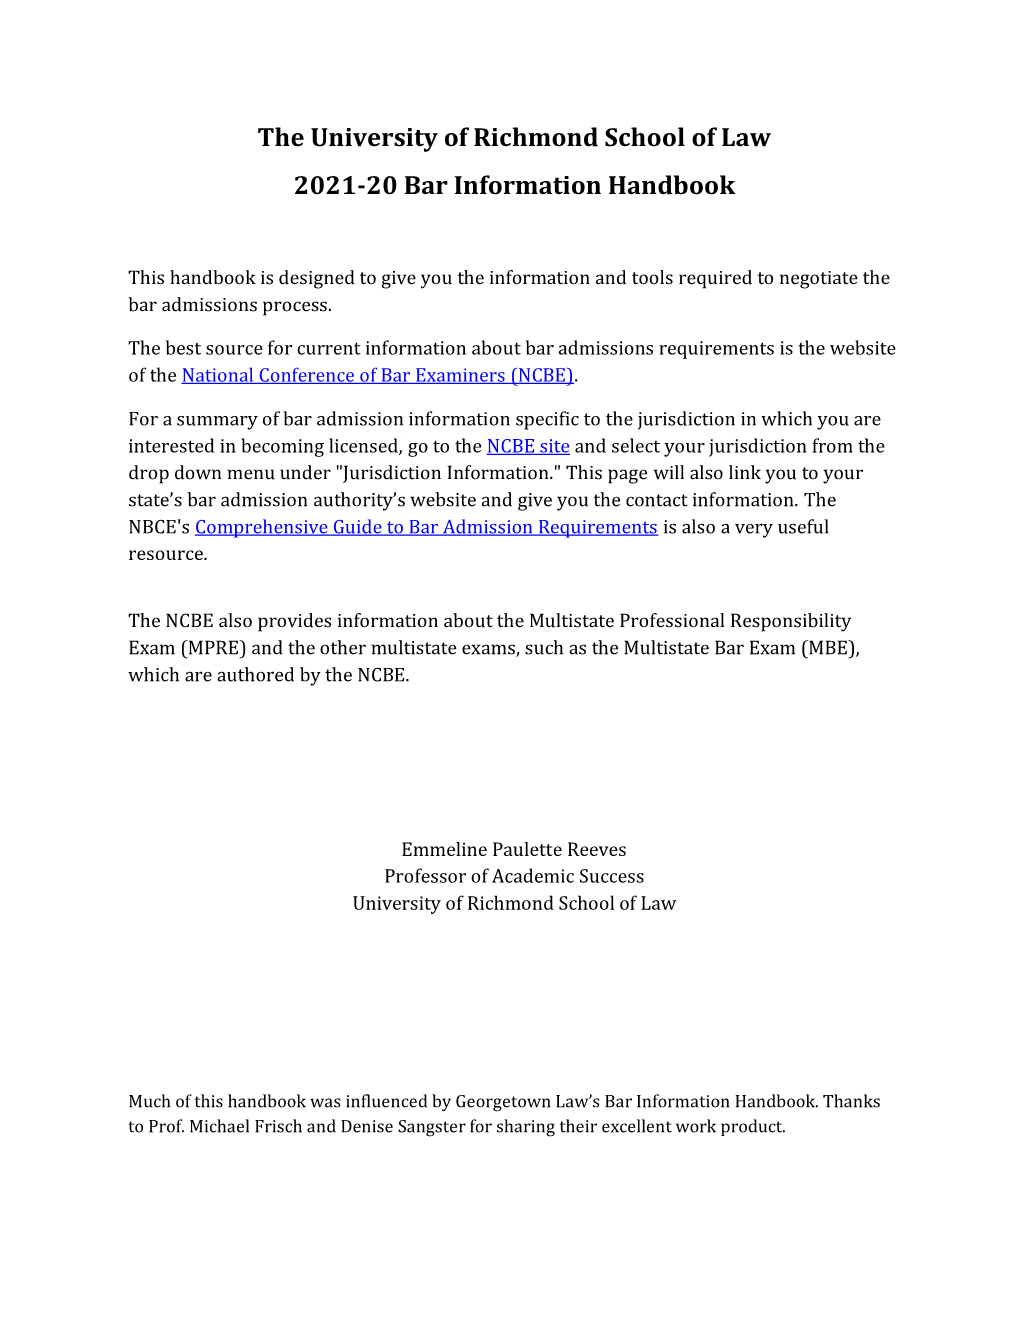 The University of Richmond School of Law 2020-21 Bar Information Handbook